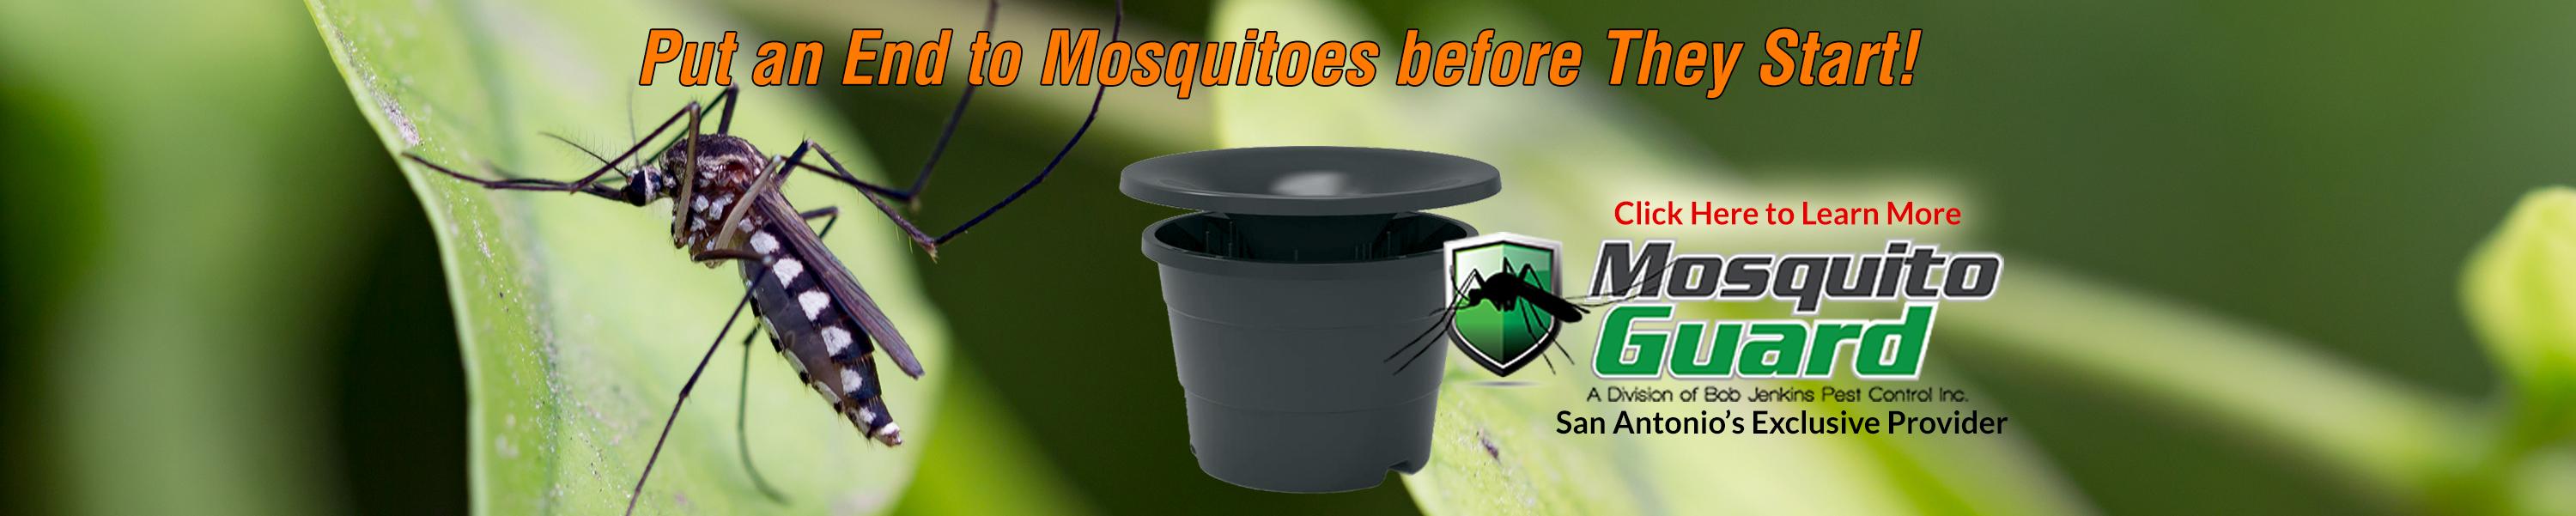 Mosquito guard Pro